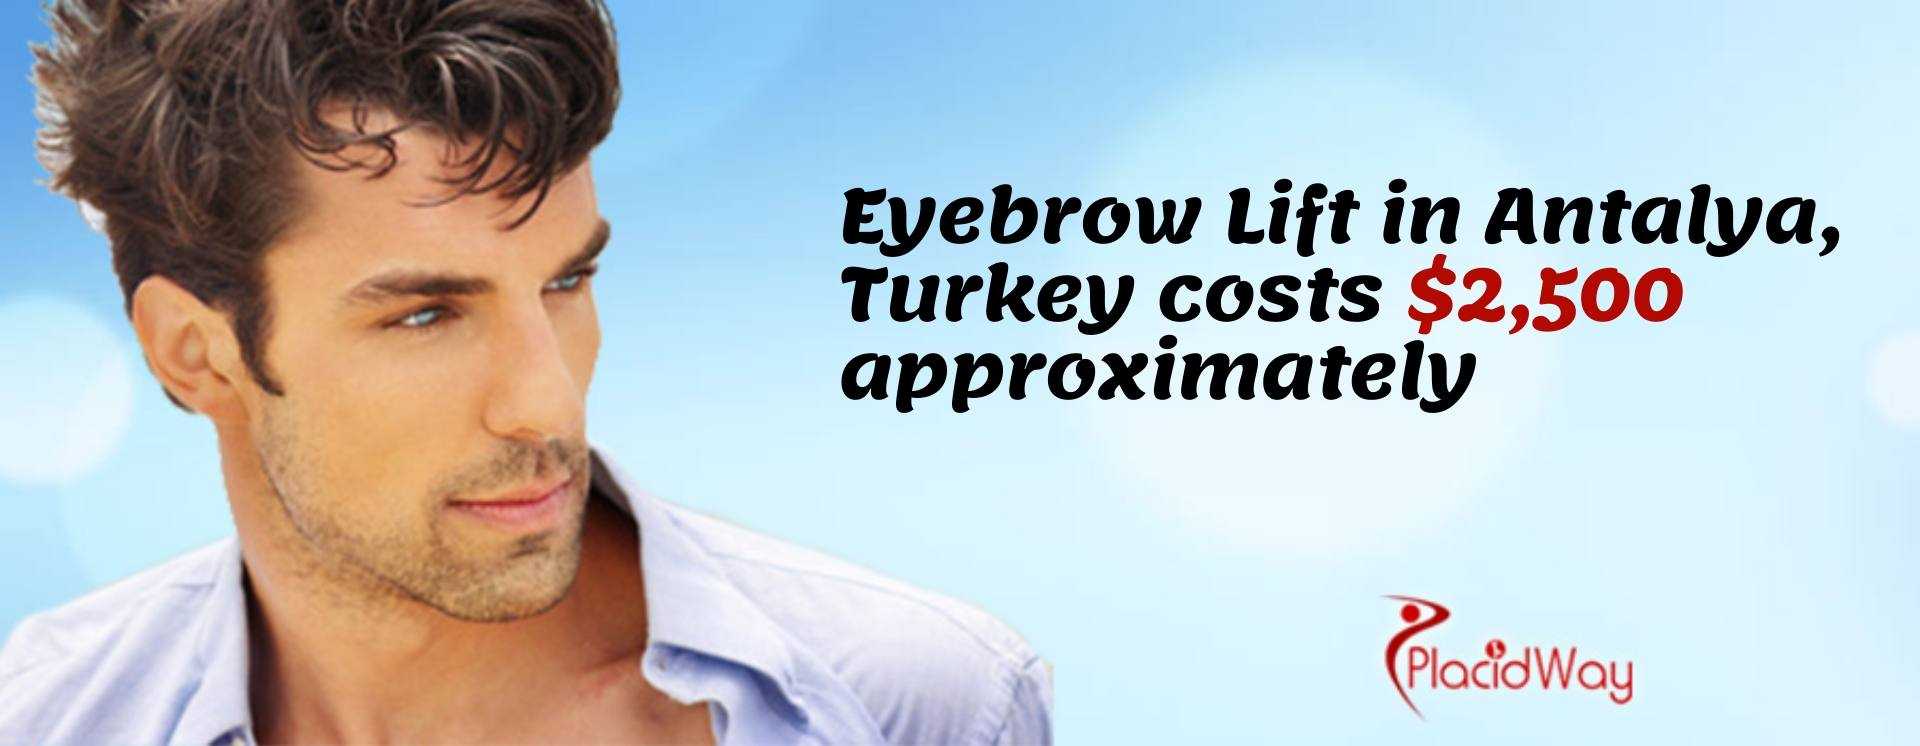 Eyebrow Hair Transplant in Antalya, Turkey